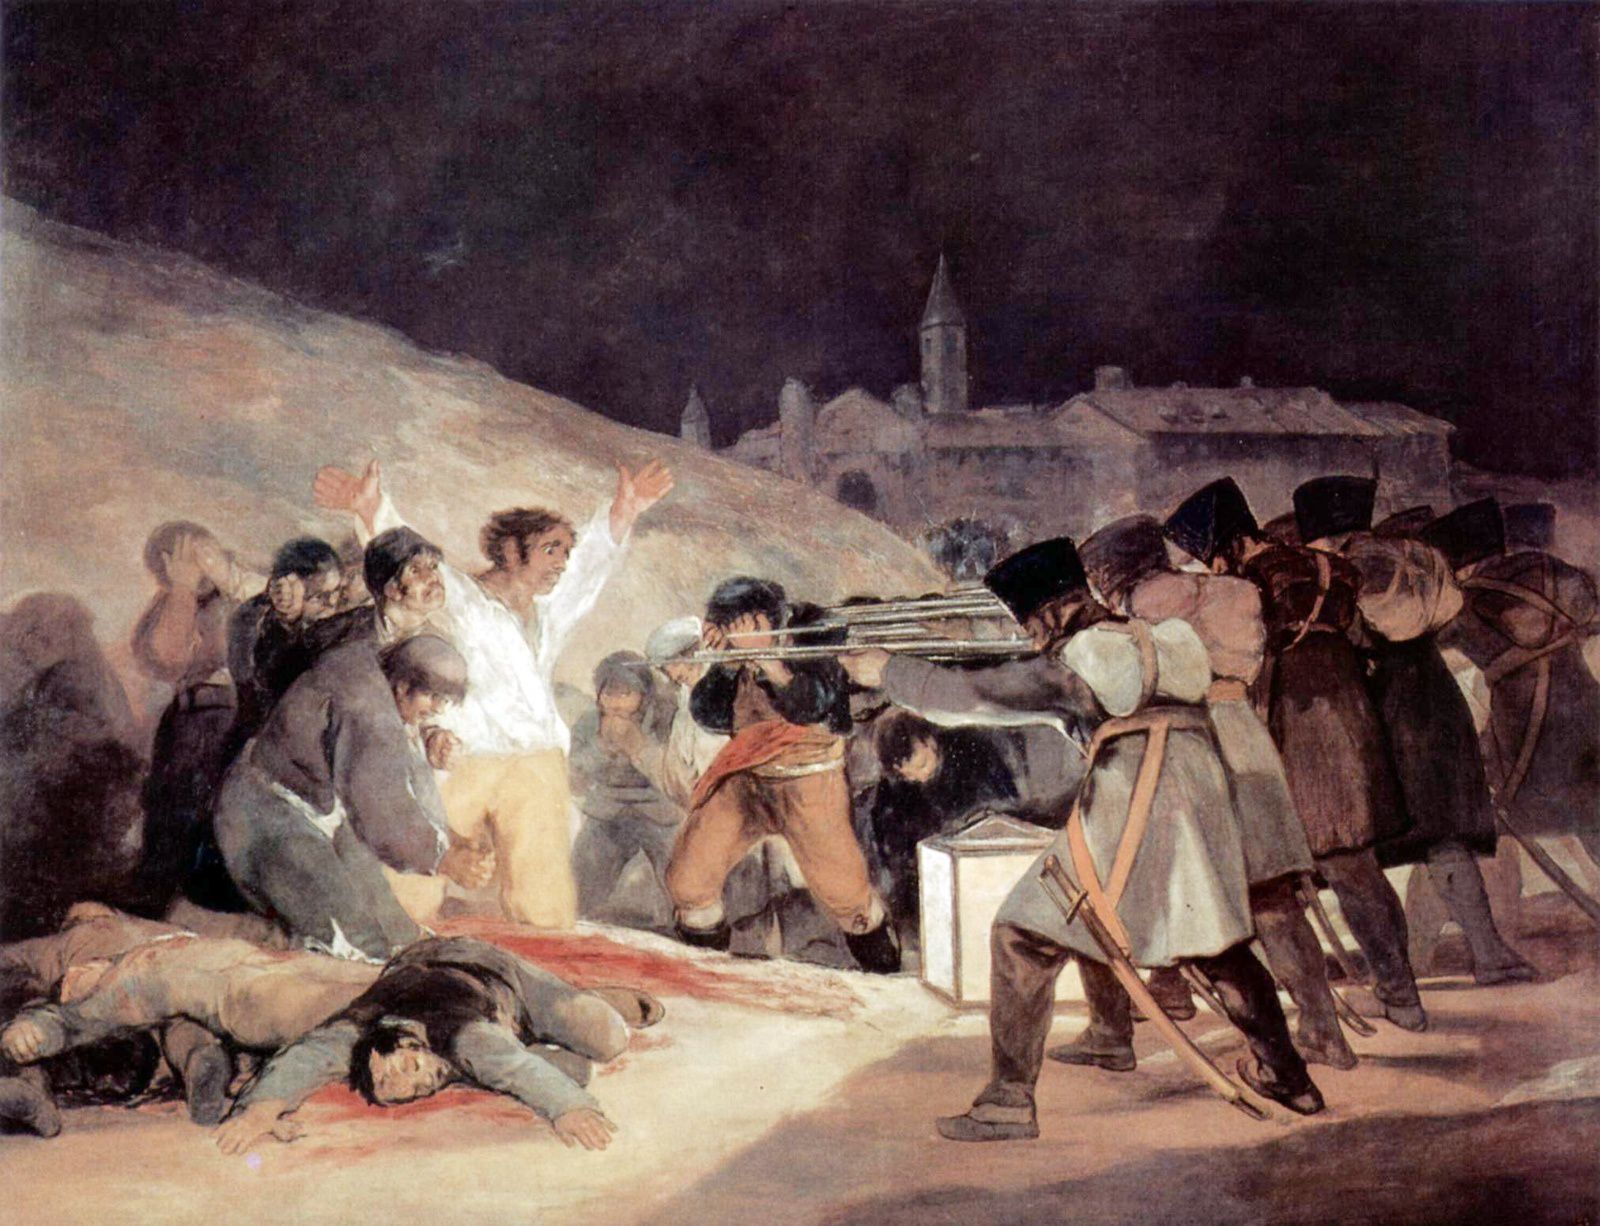 Eylau, Borodino, "tres de mayo" de Goya, Waterloo, des millions de morts...